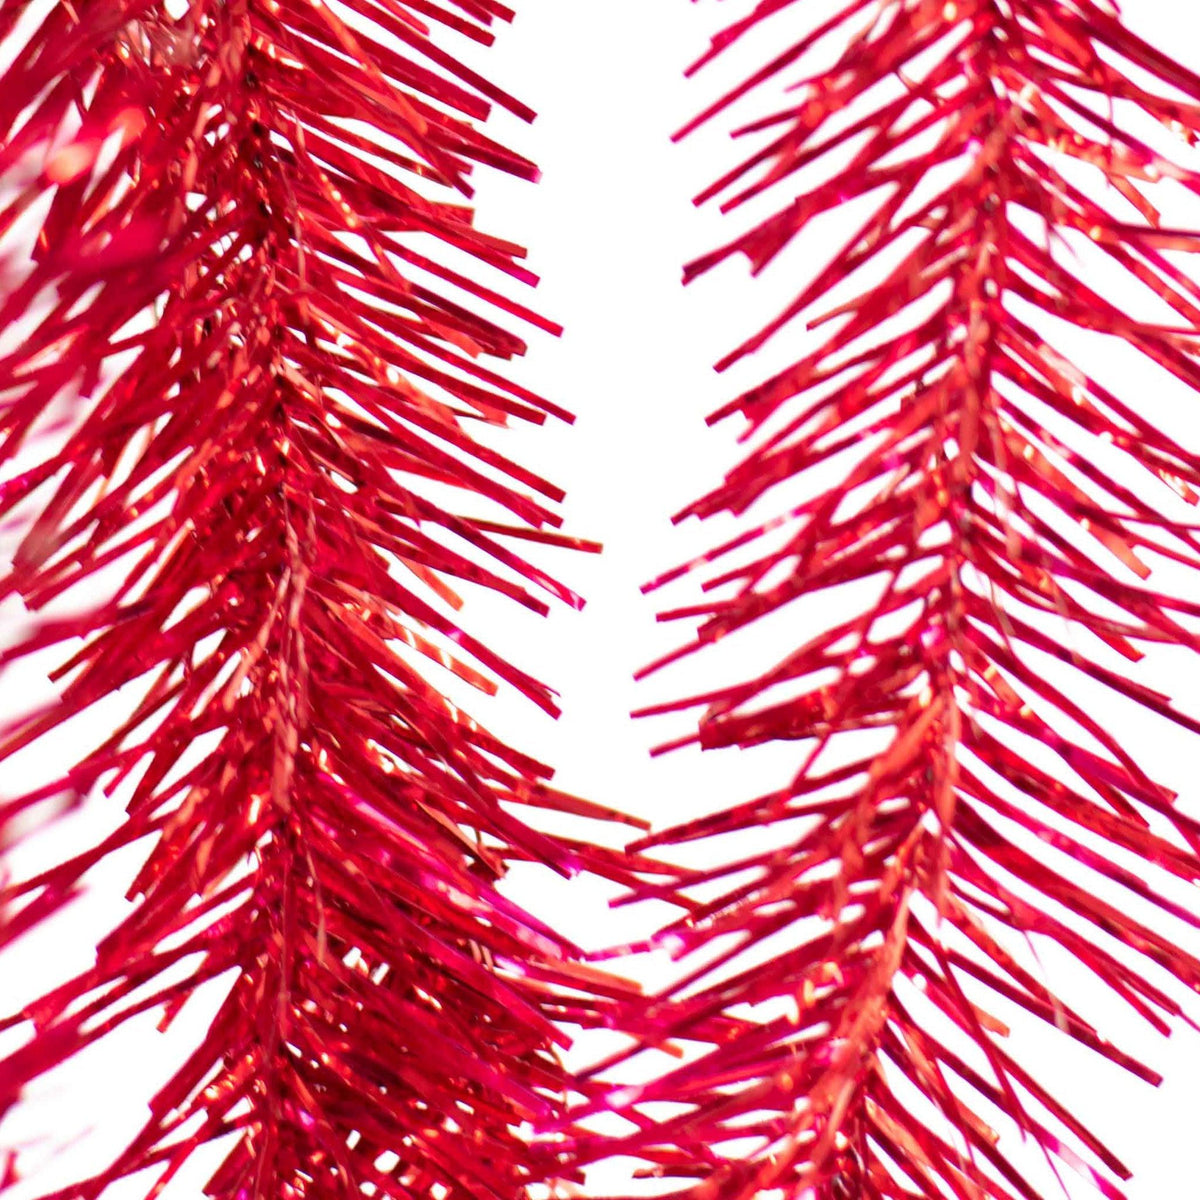 Lee Display's brand new 25ft Shiny Metallic Red Tinsel Garlands and Fringe Embellishments on sale at leedisplay.com